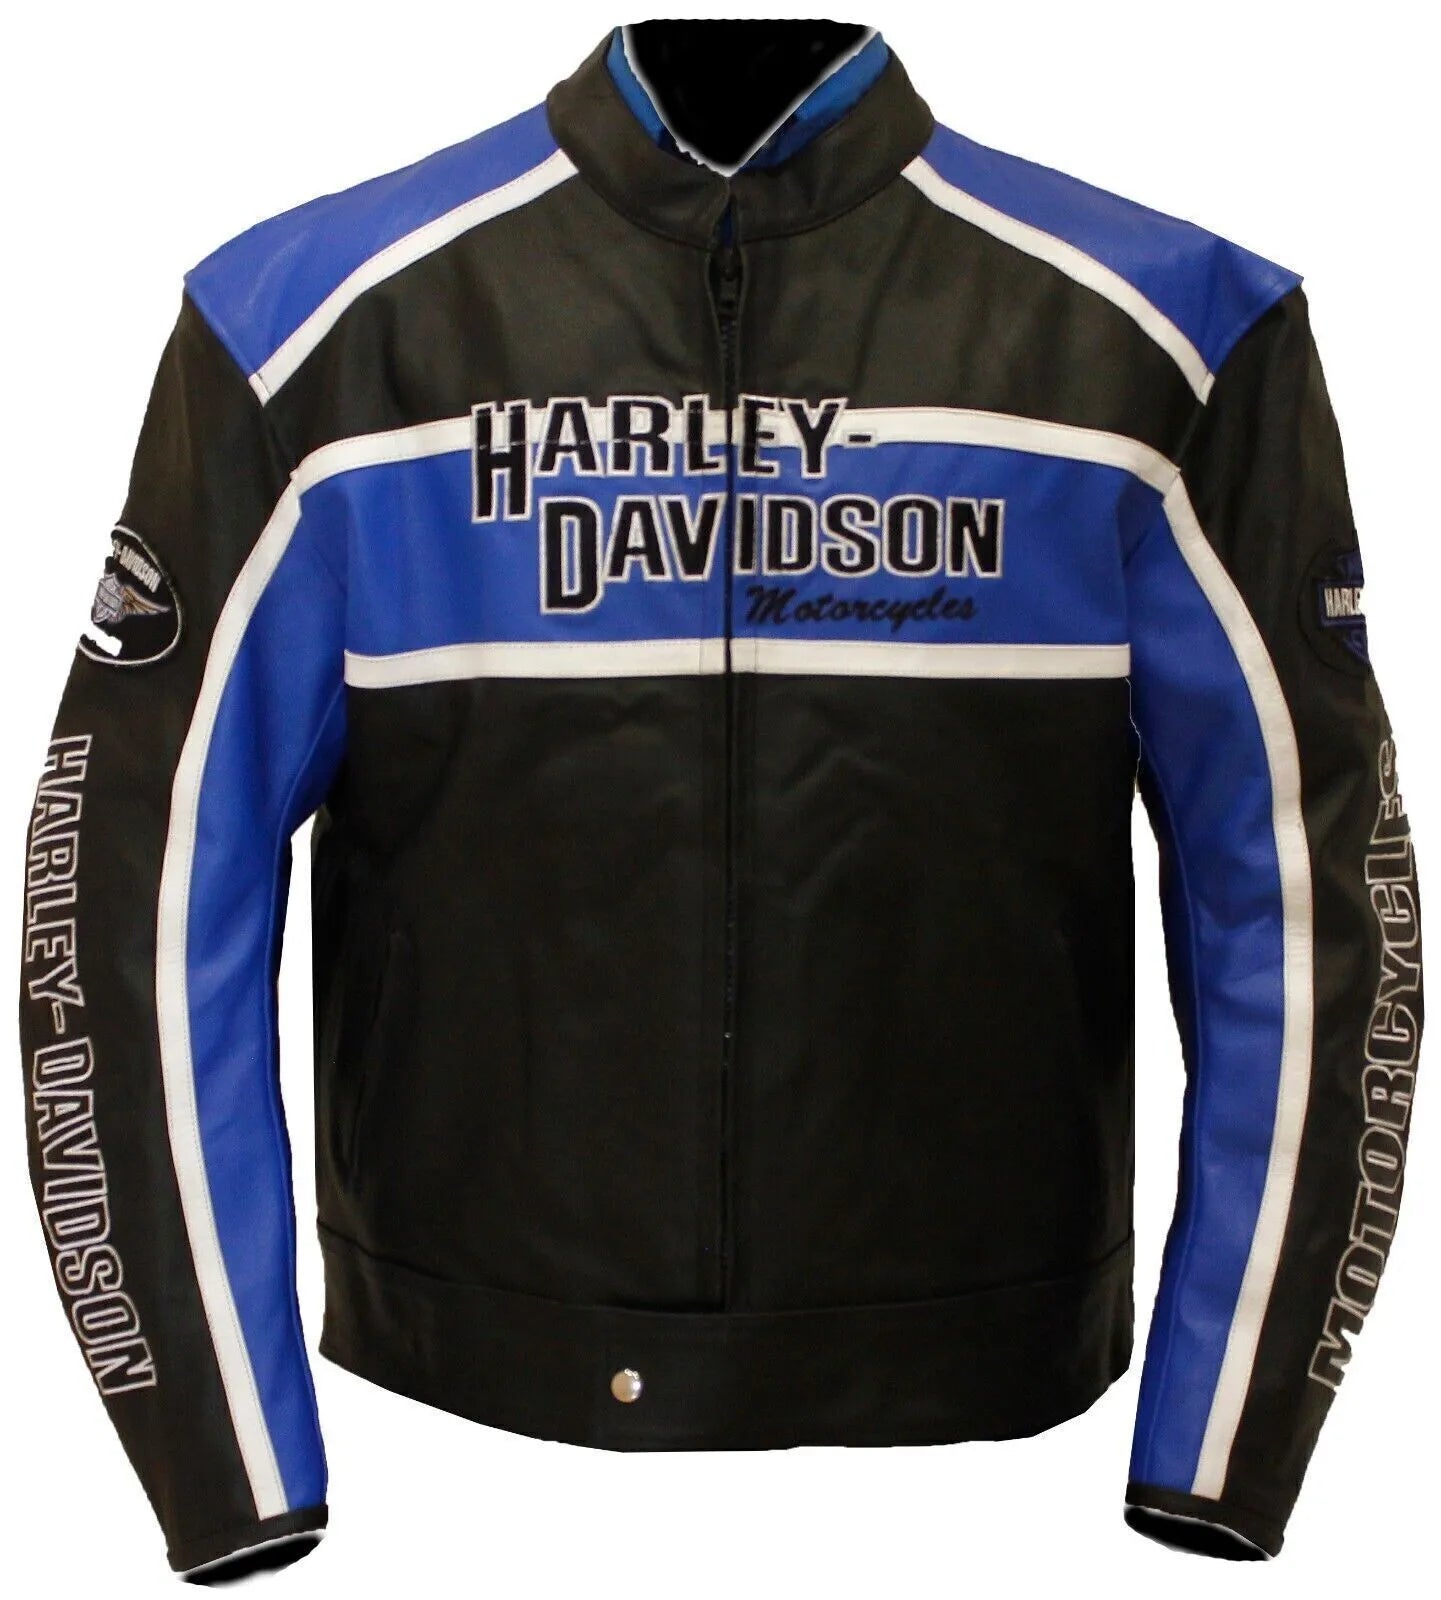 Harley Davidson Men’s CLASSIC BLUE CRUISER Jacket Motorcycle Real Leather Printed Jacket